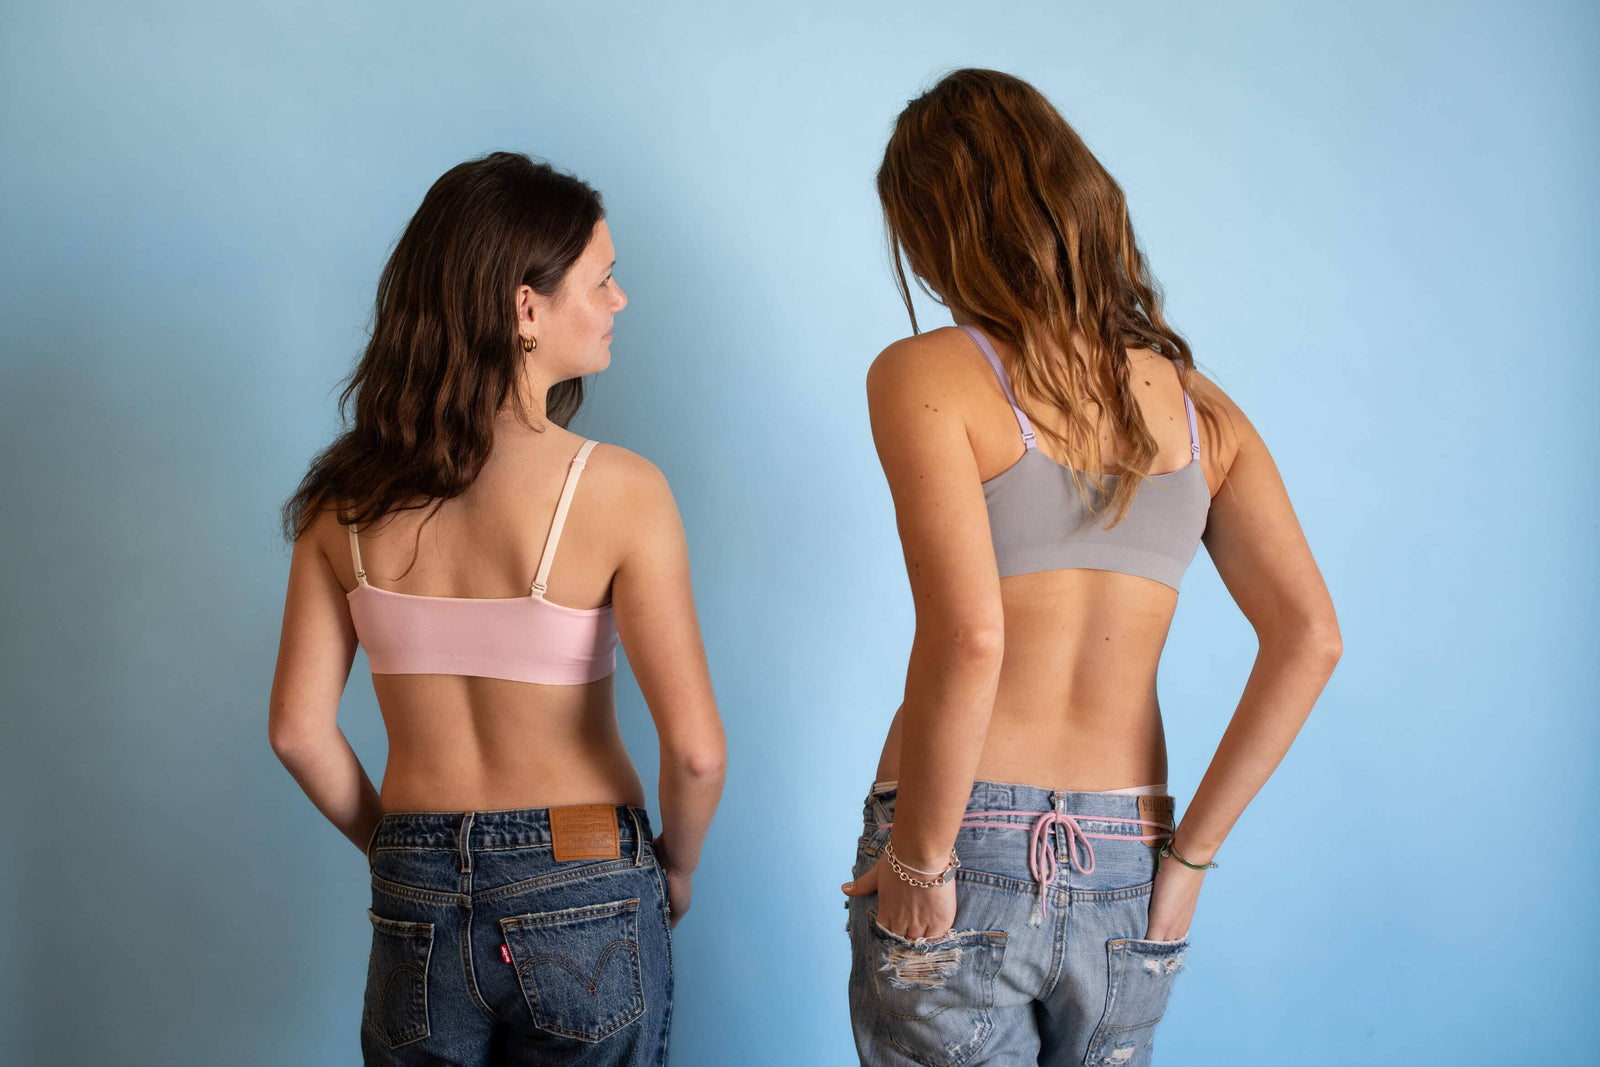 Two teenage girls wearing bras by Bleuet.